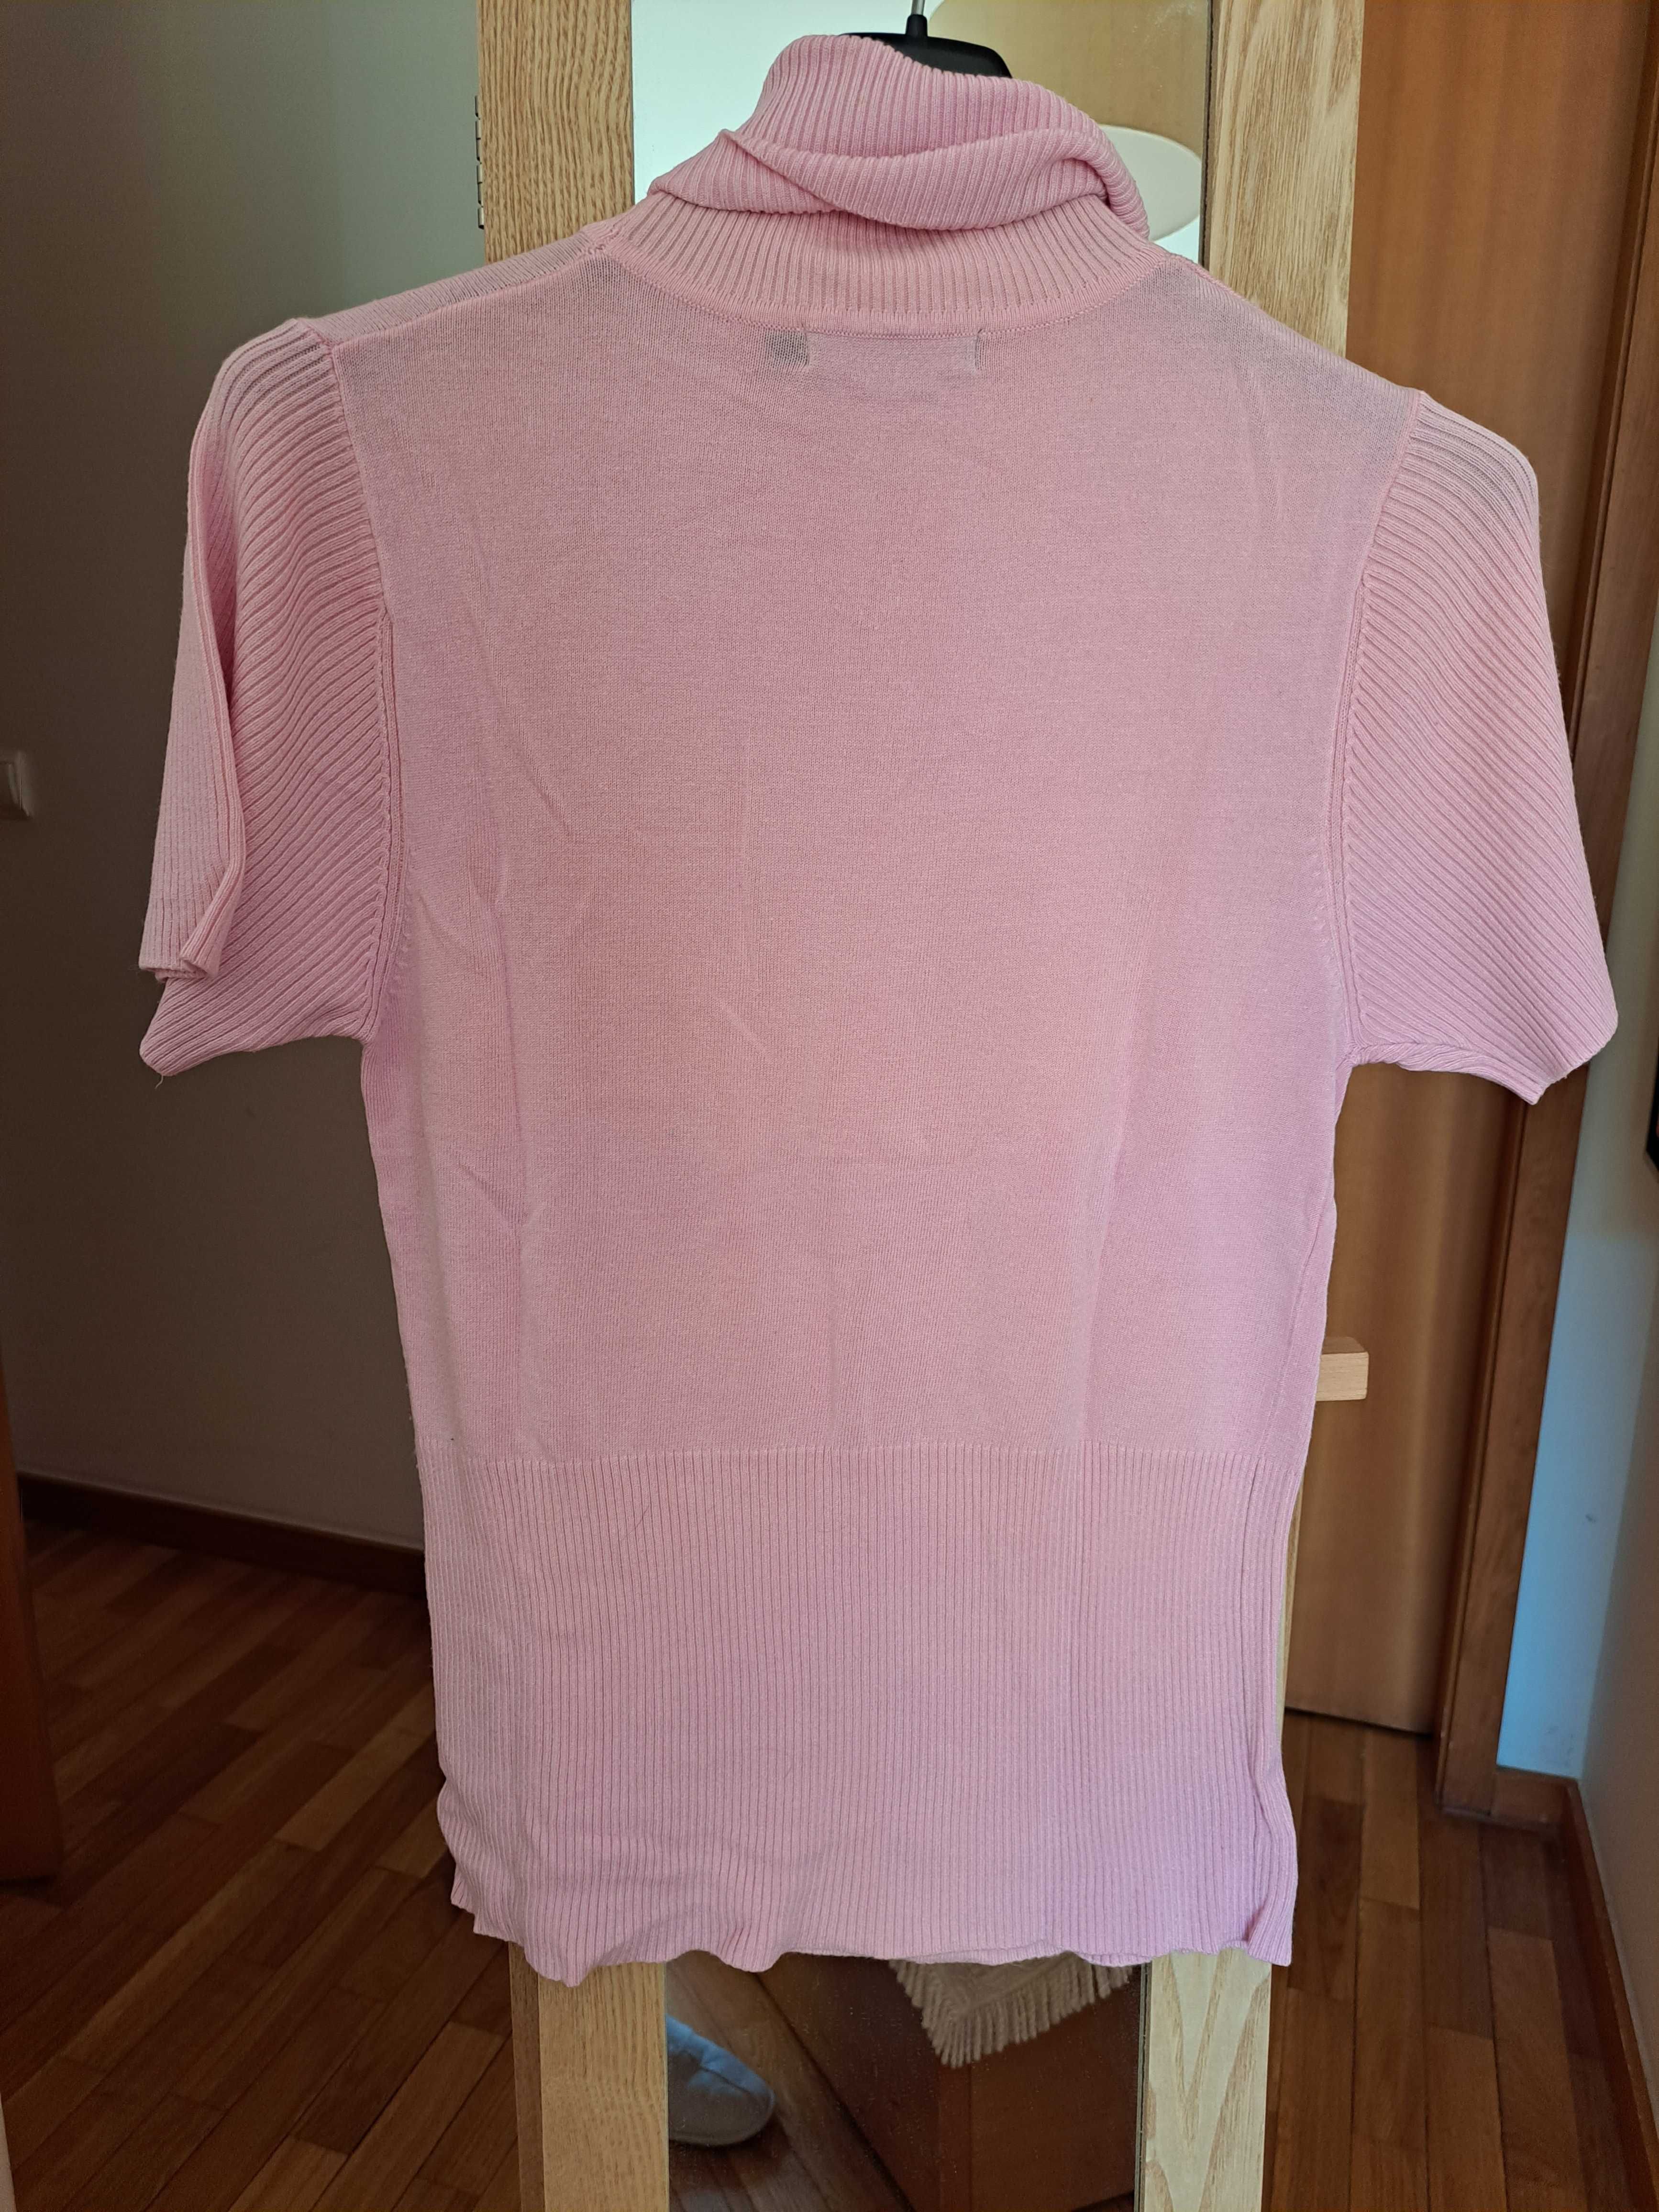 Camisola rosa tamanho M